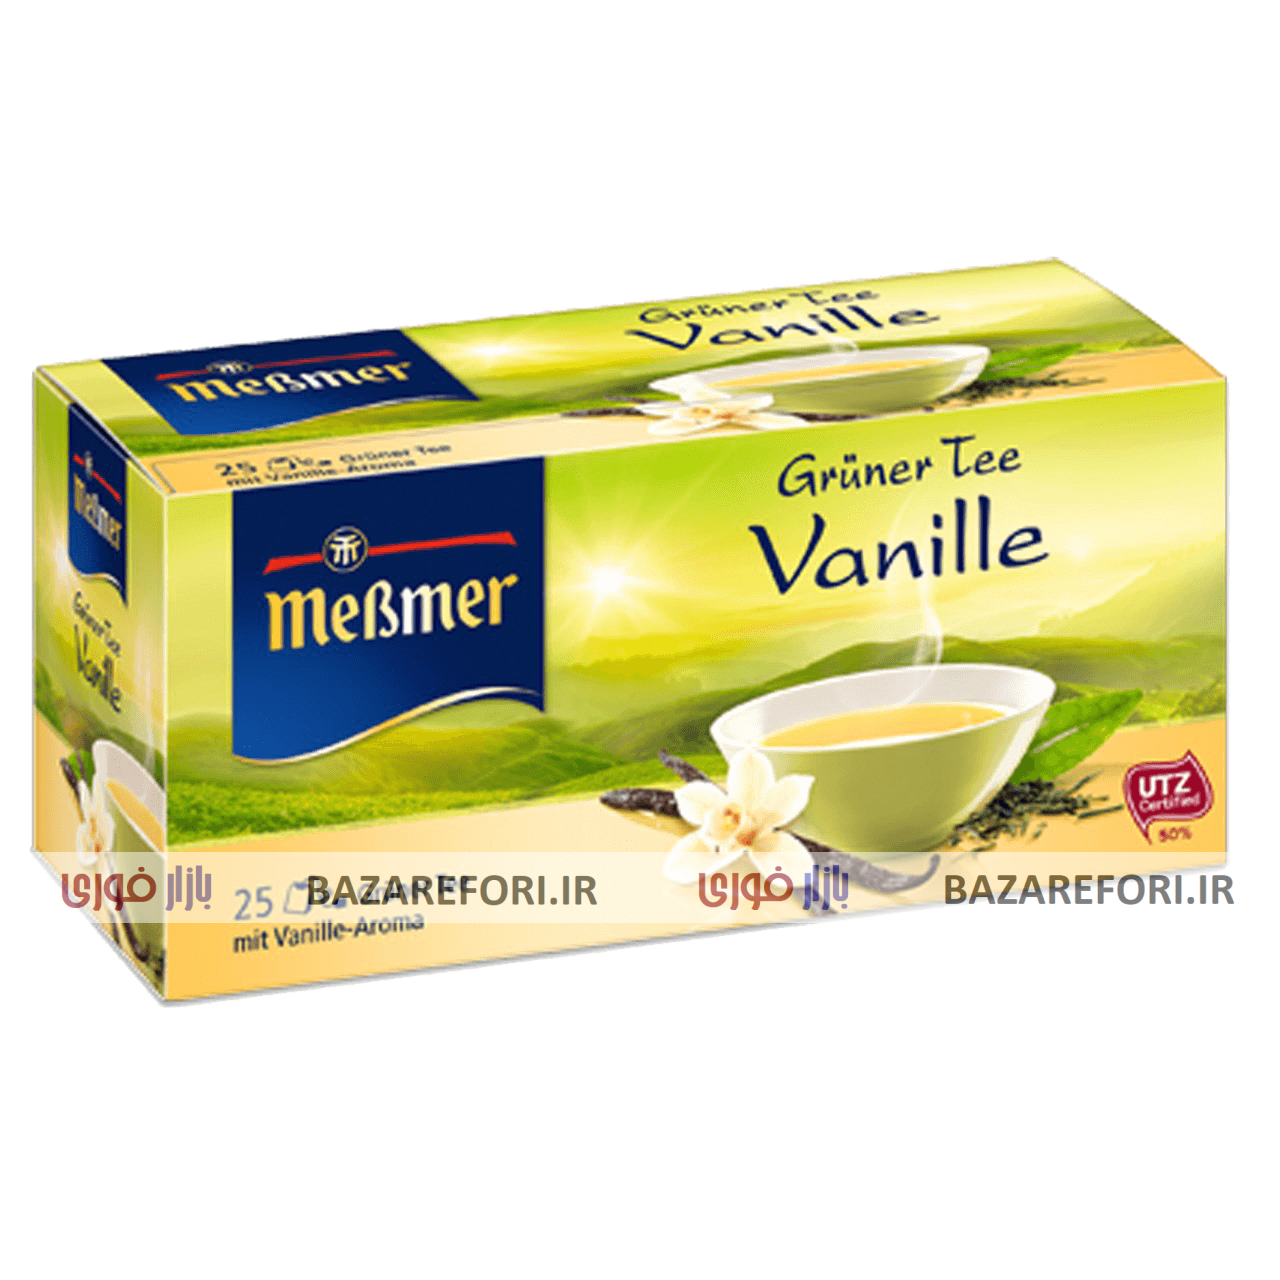 بسته دمنوش گیاهی چای سبز و وانیل مسمر مدل Gruner Tea Vanille